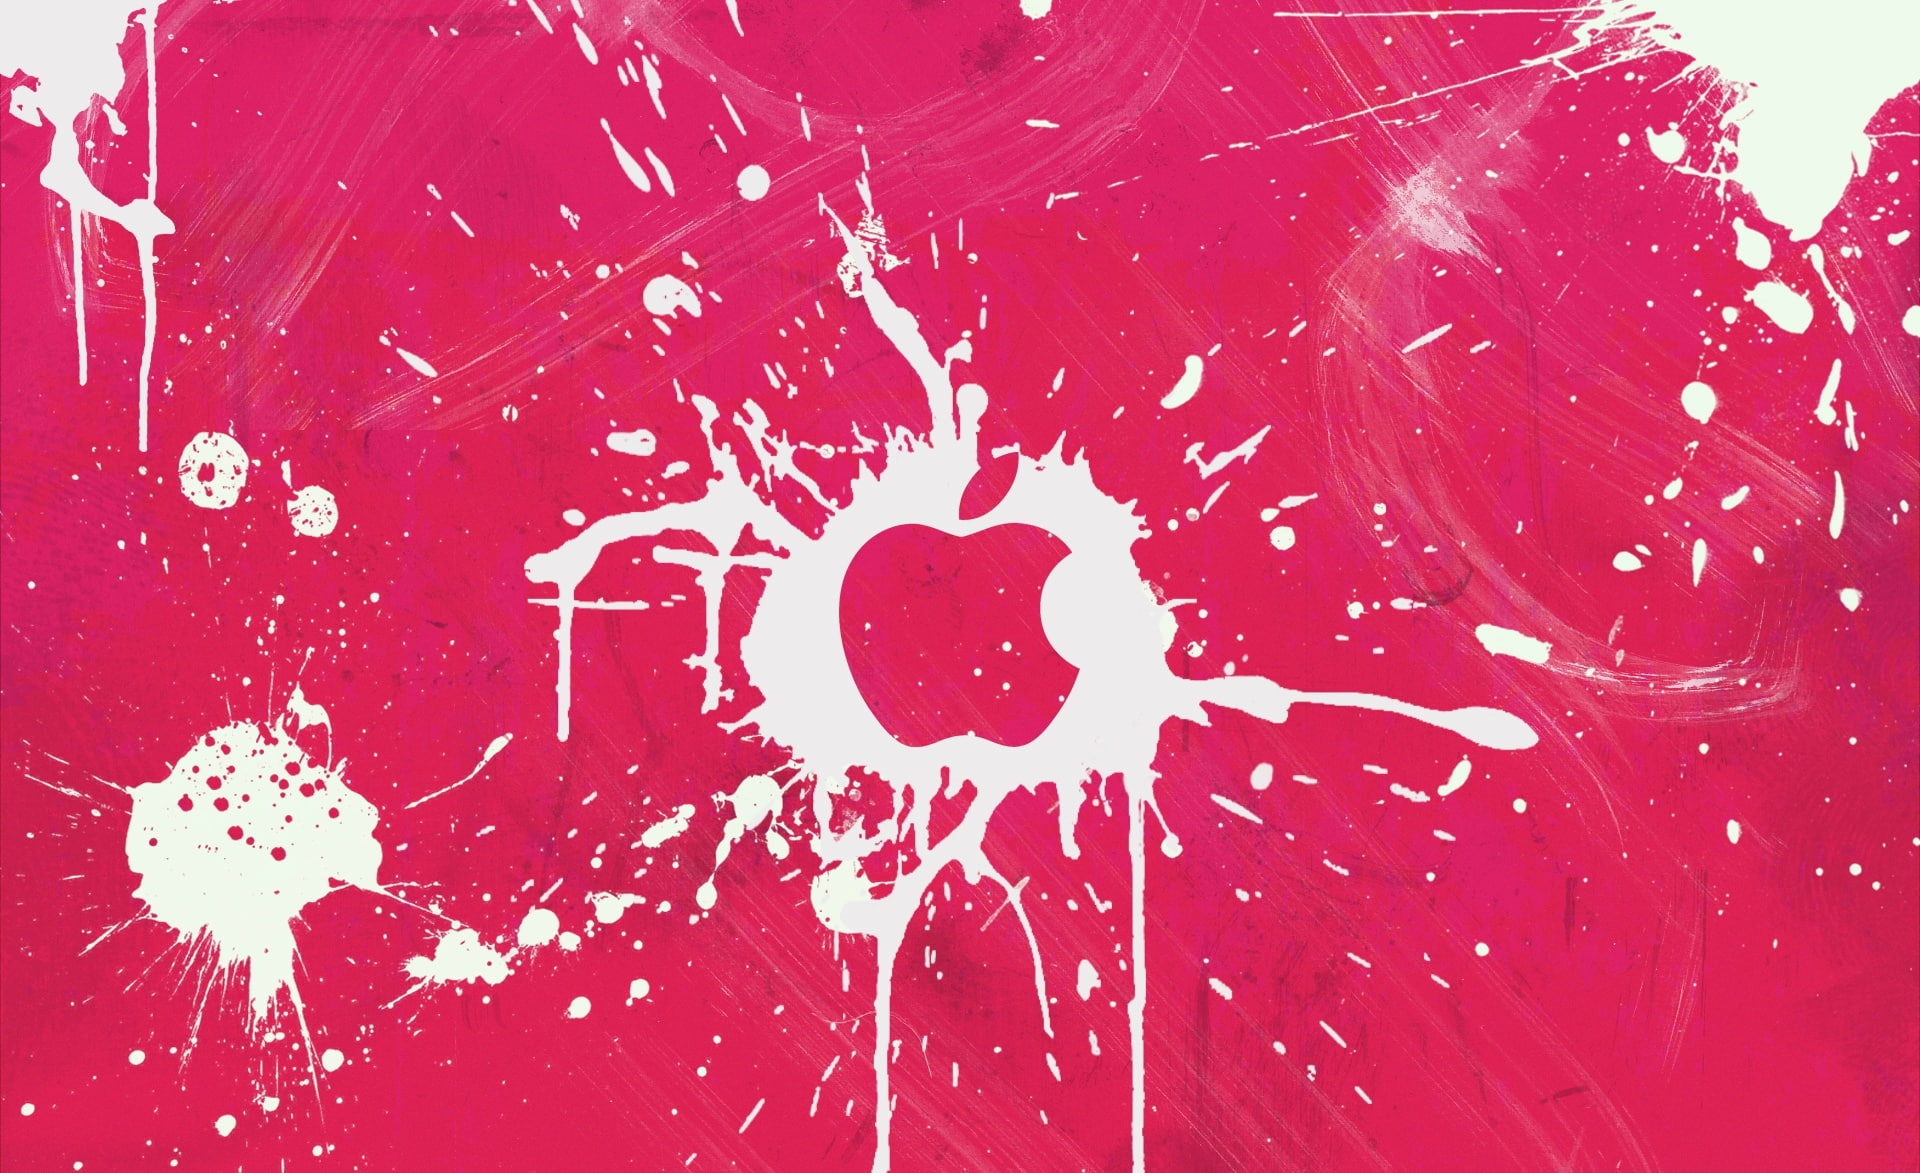 Splash Pink, Apple logo, Computers, Mac, splattered, paint, art and craft